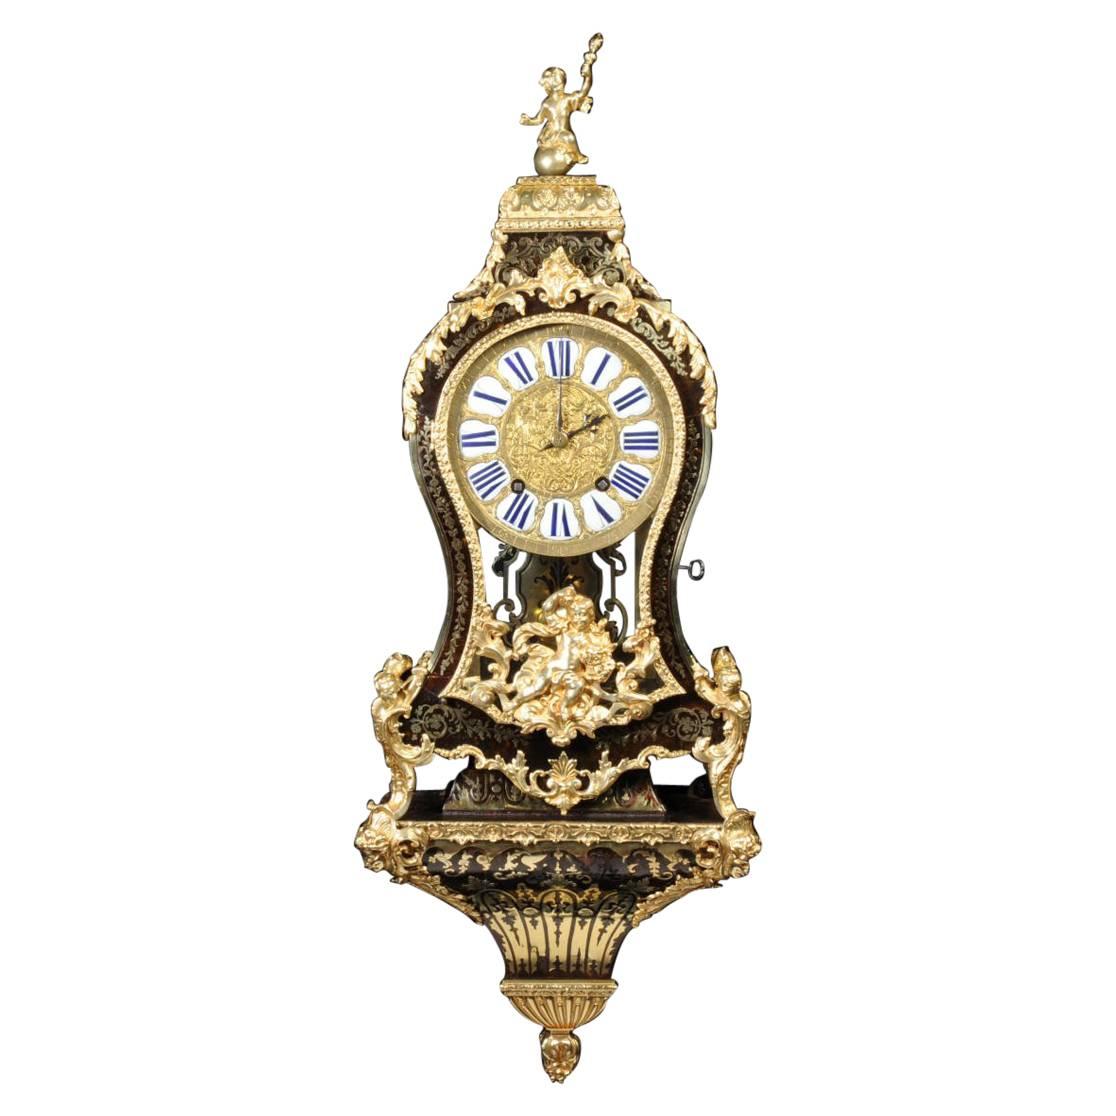 Exquisite Boulle Bracket Clock with Original Verge Escapement by Admyrauld Paris